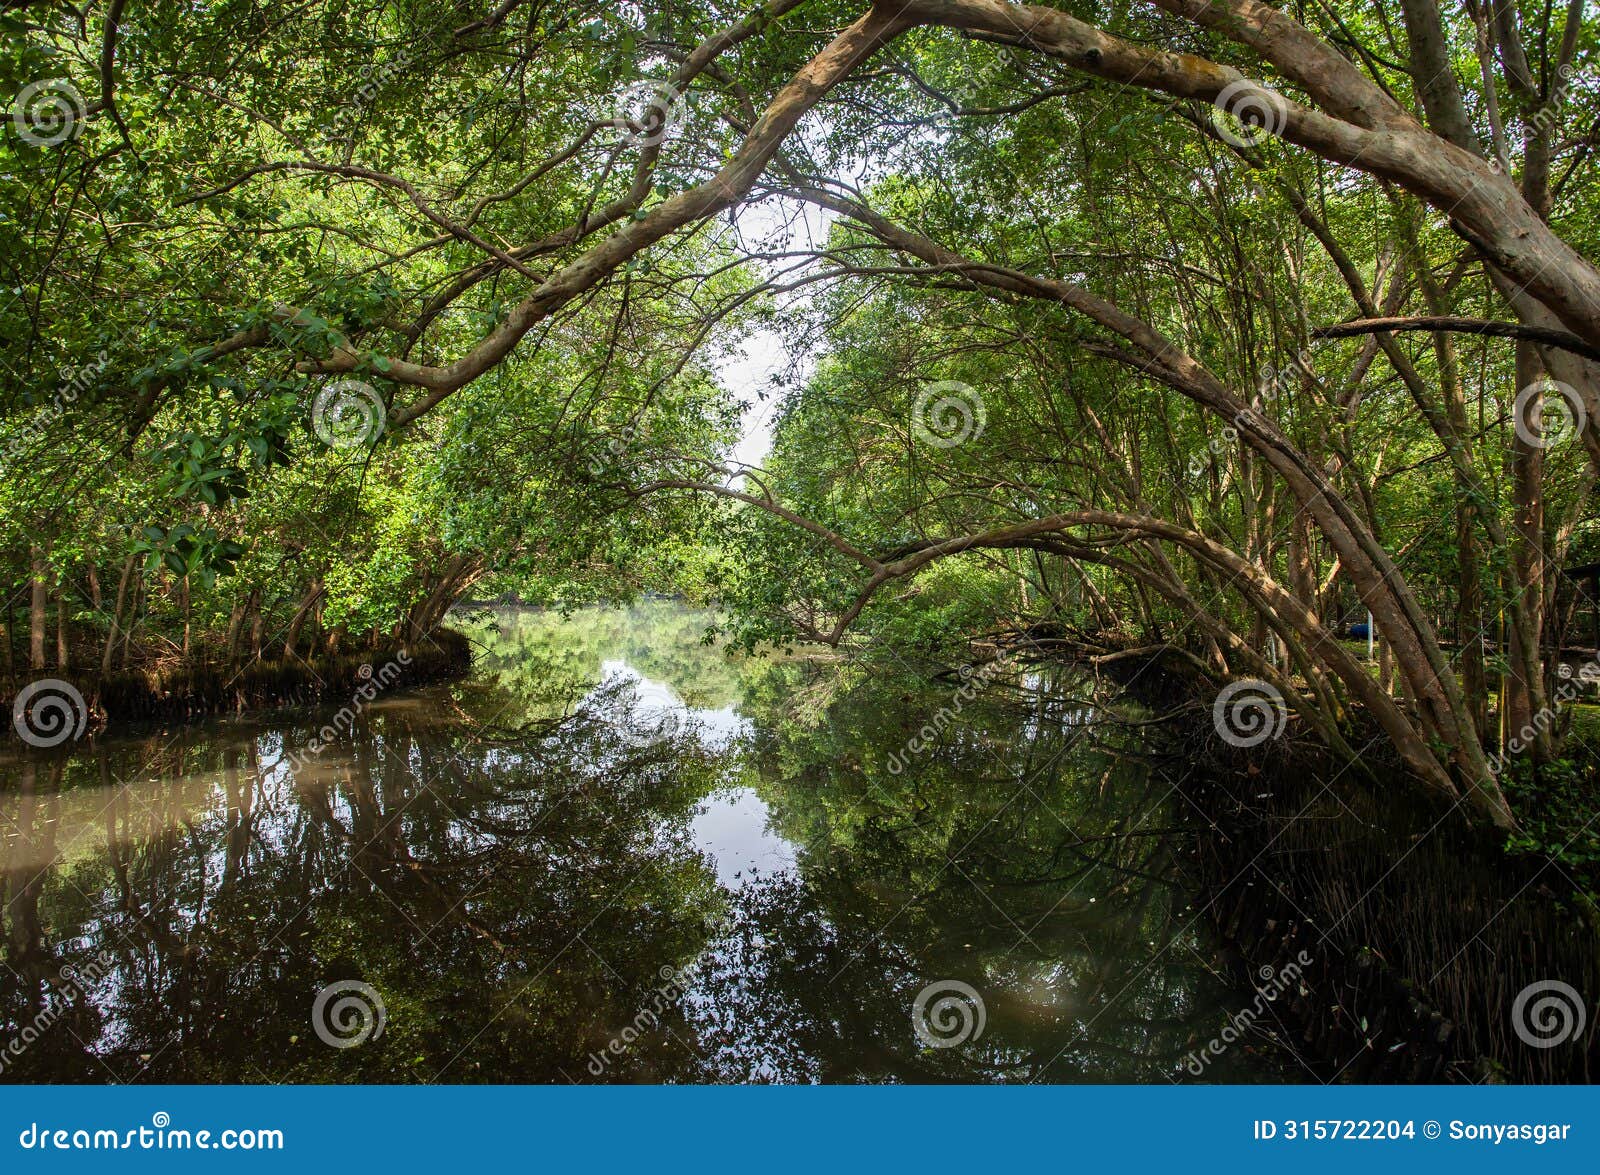 the atmosphere is cool and calming in the mangrove nature tourism park area in muara angke, pantai indah kapuk, jakarta